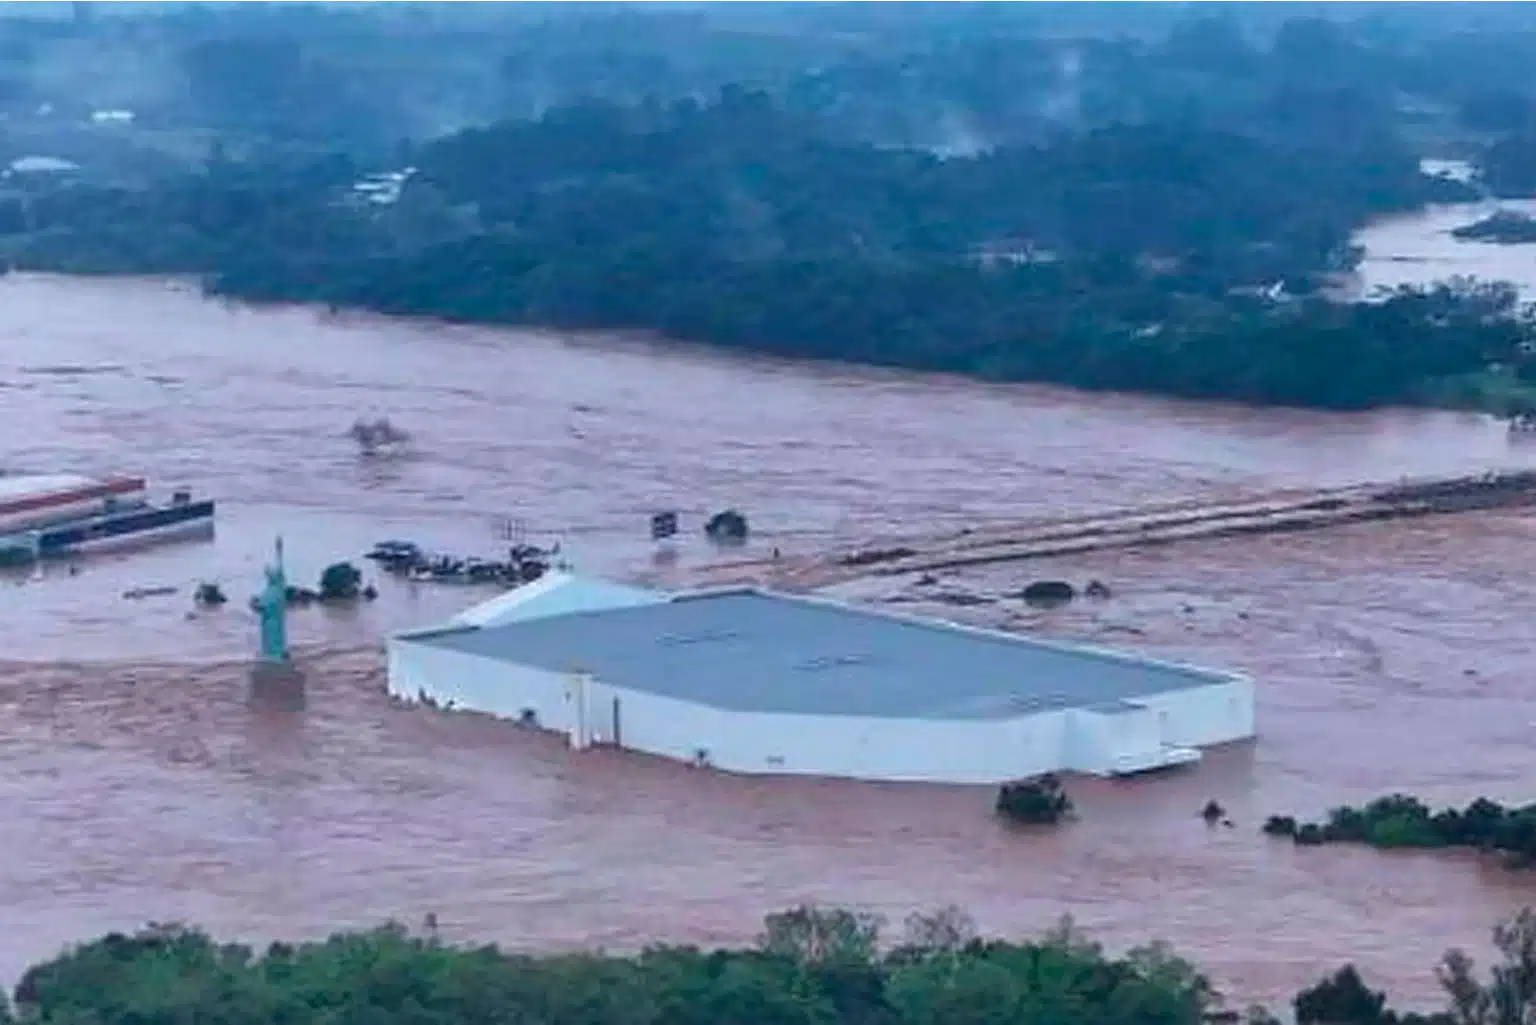 Loja Da Havan Em Lajeado (Rs) É Inundada Pela Chuva